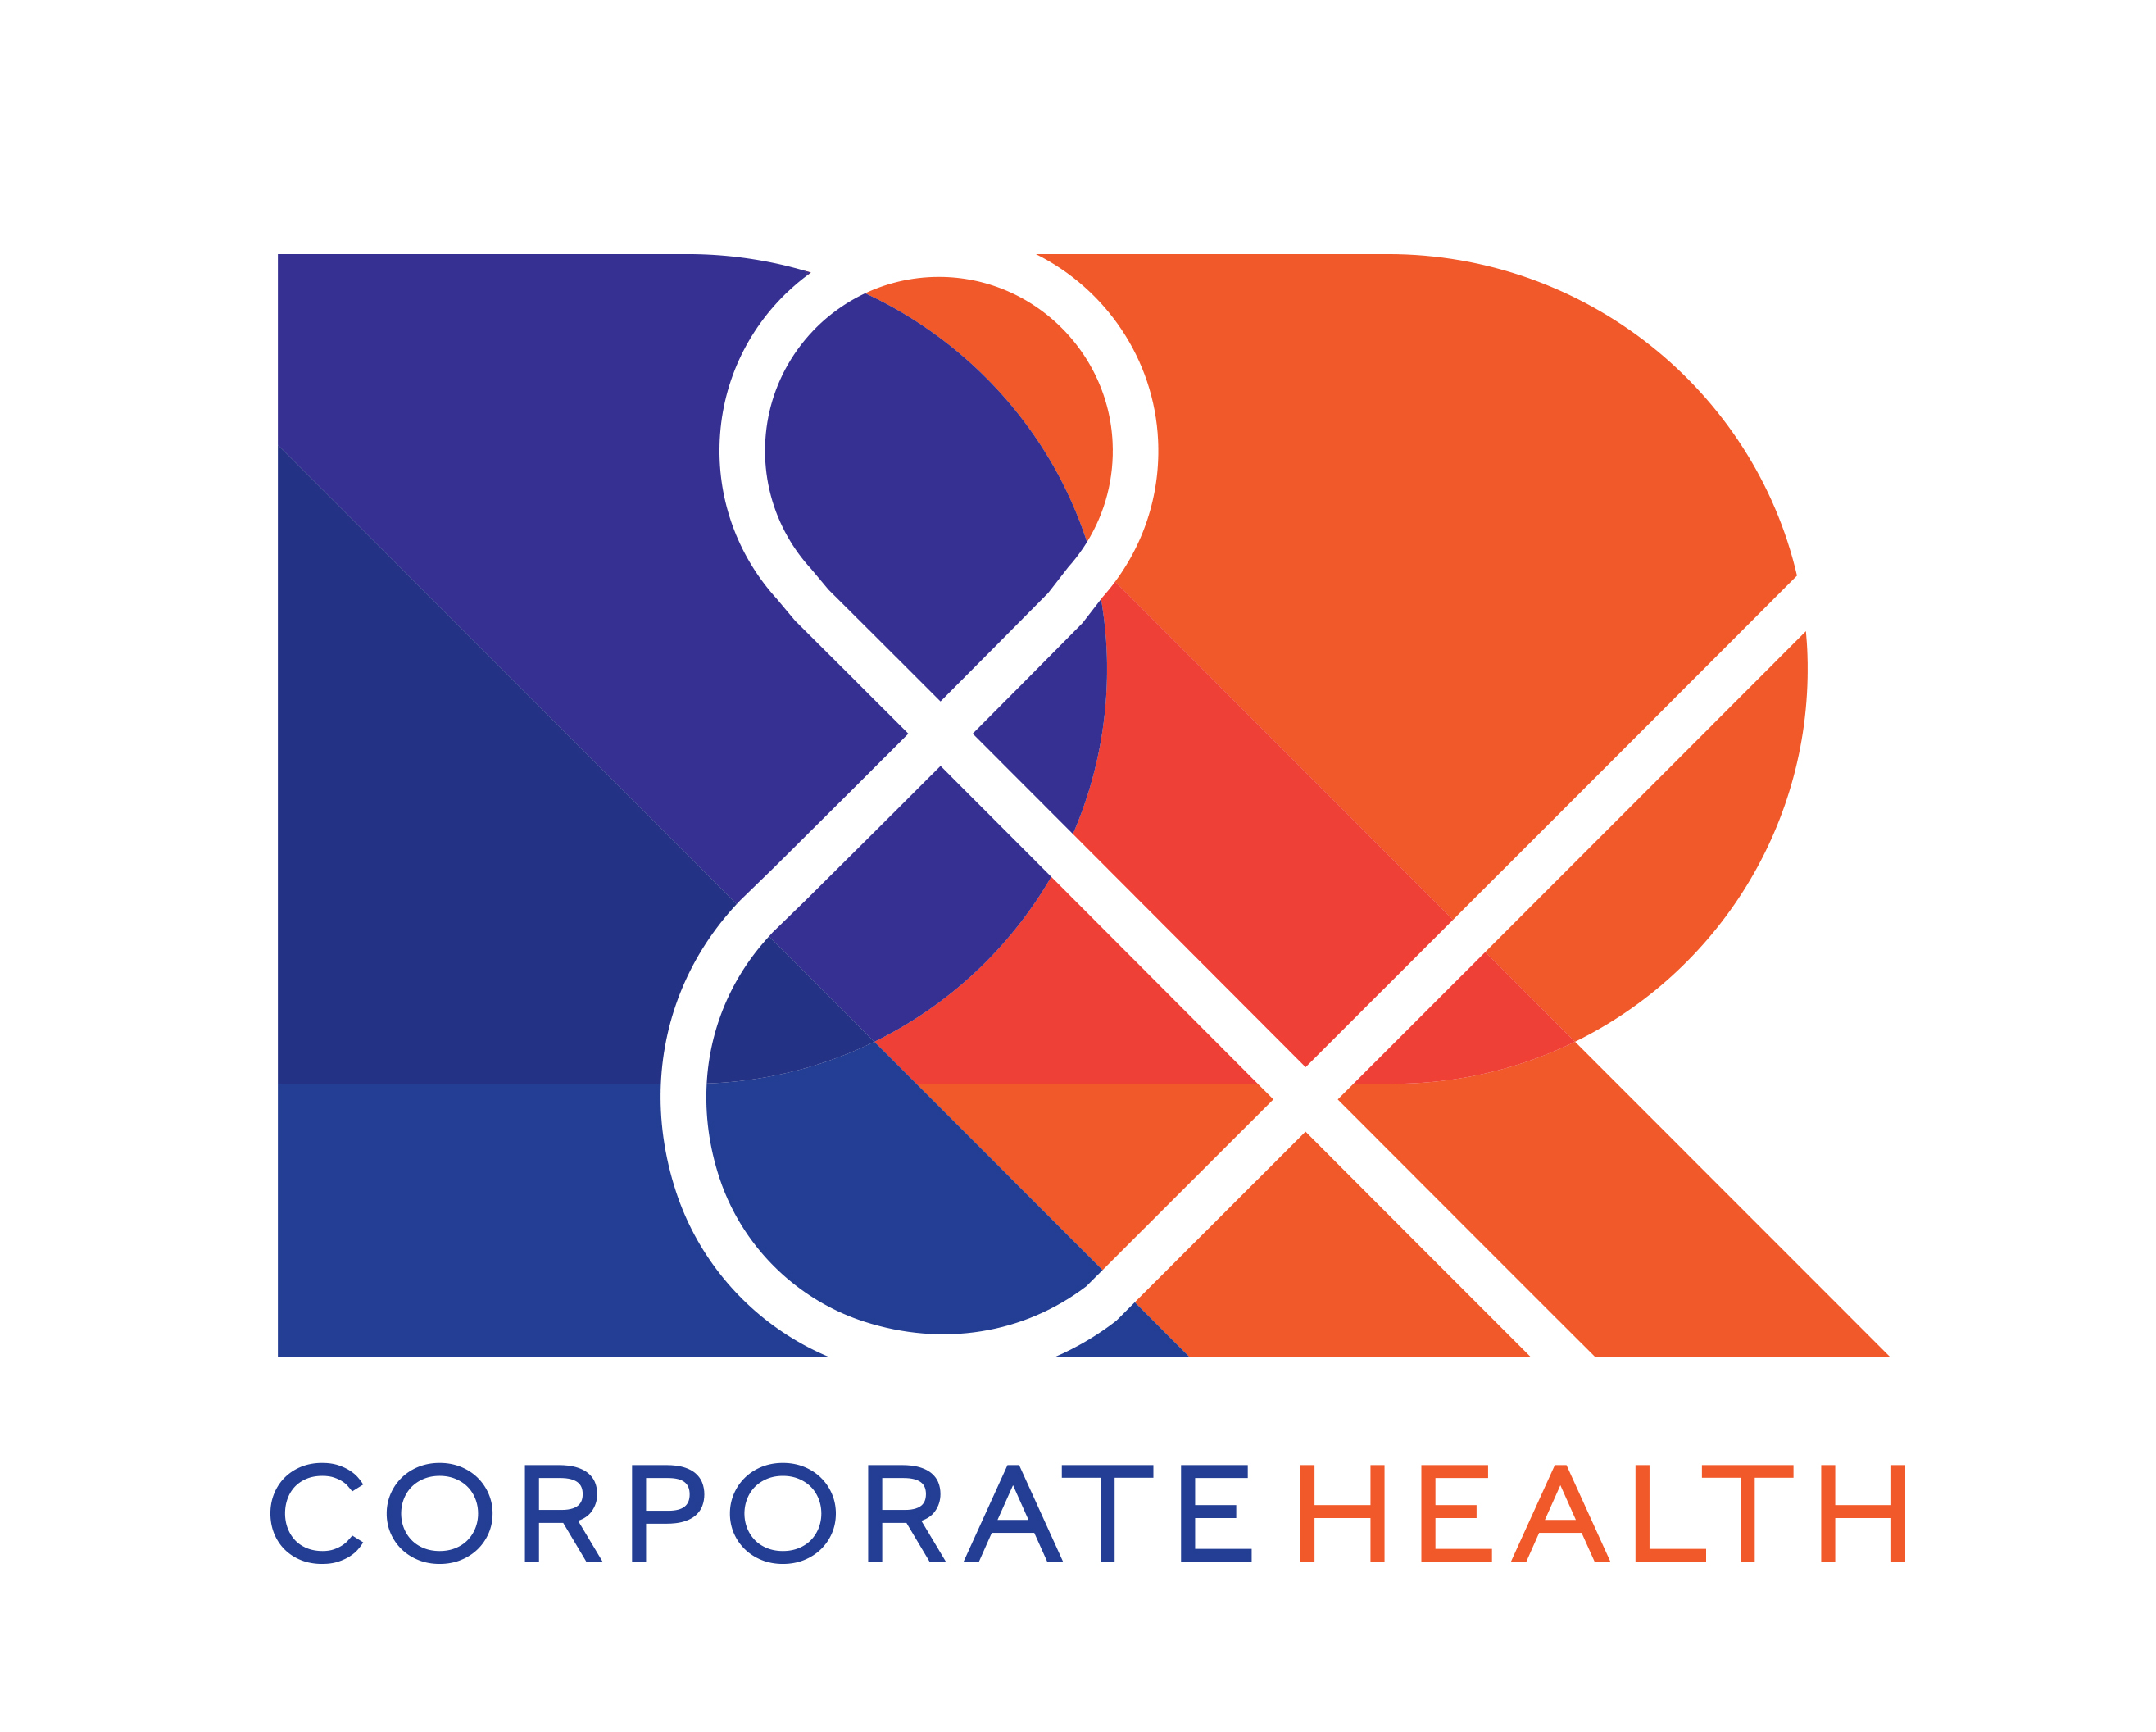 R&R Corporate Health